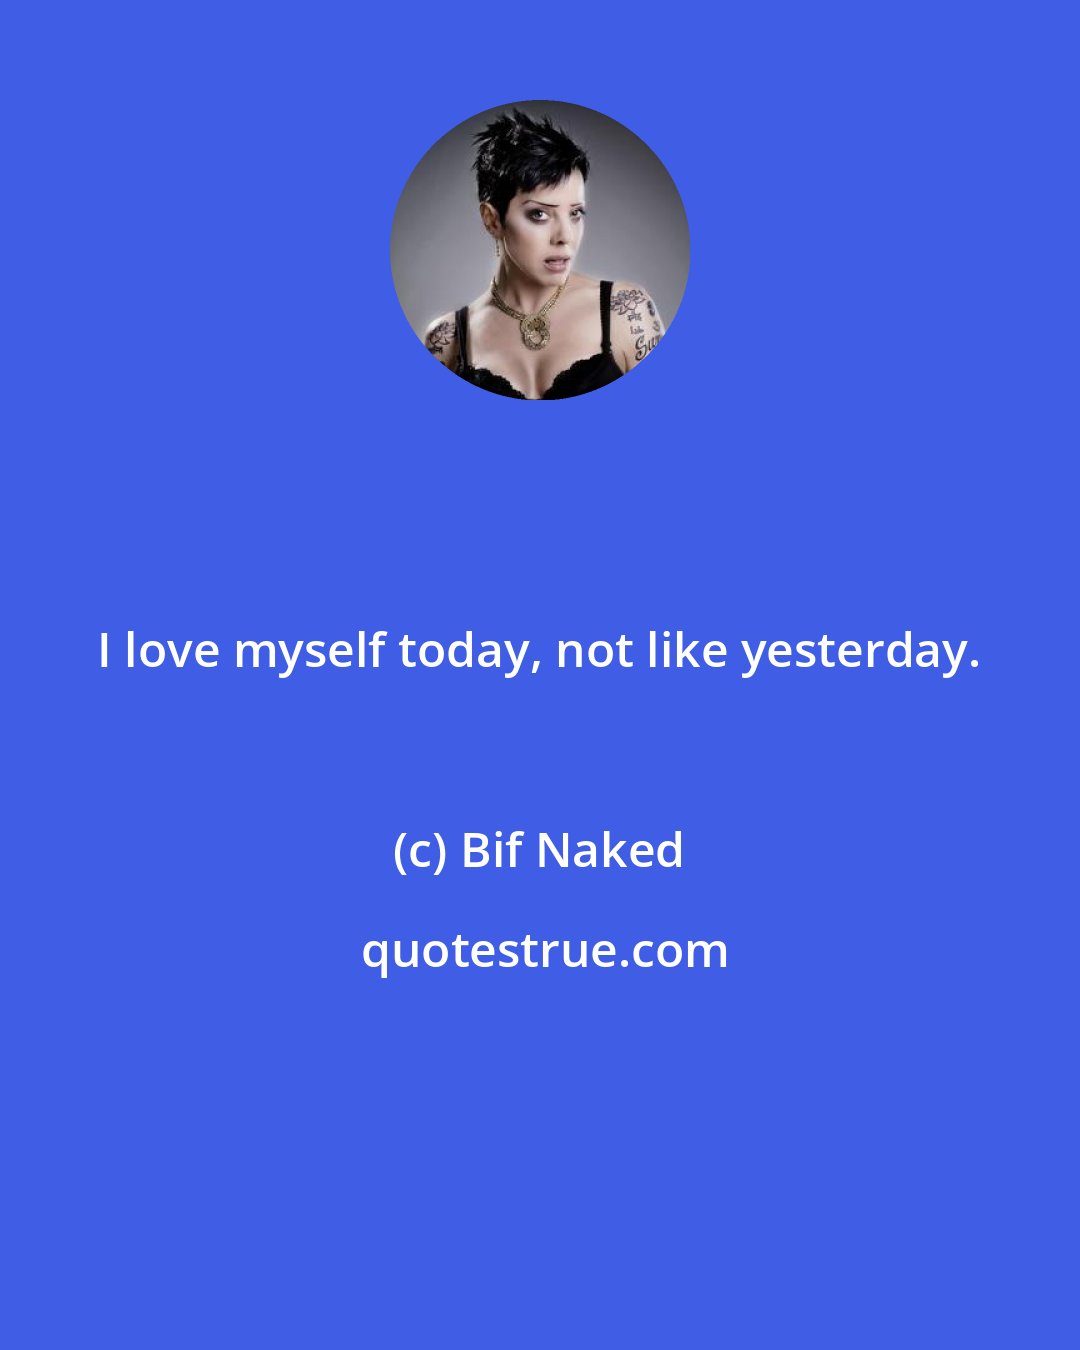 Bif Naked: I love myself today, not like yesterday.